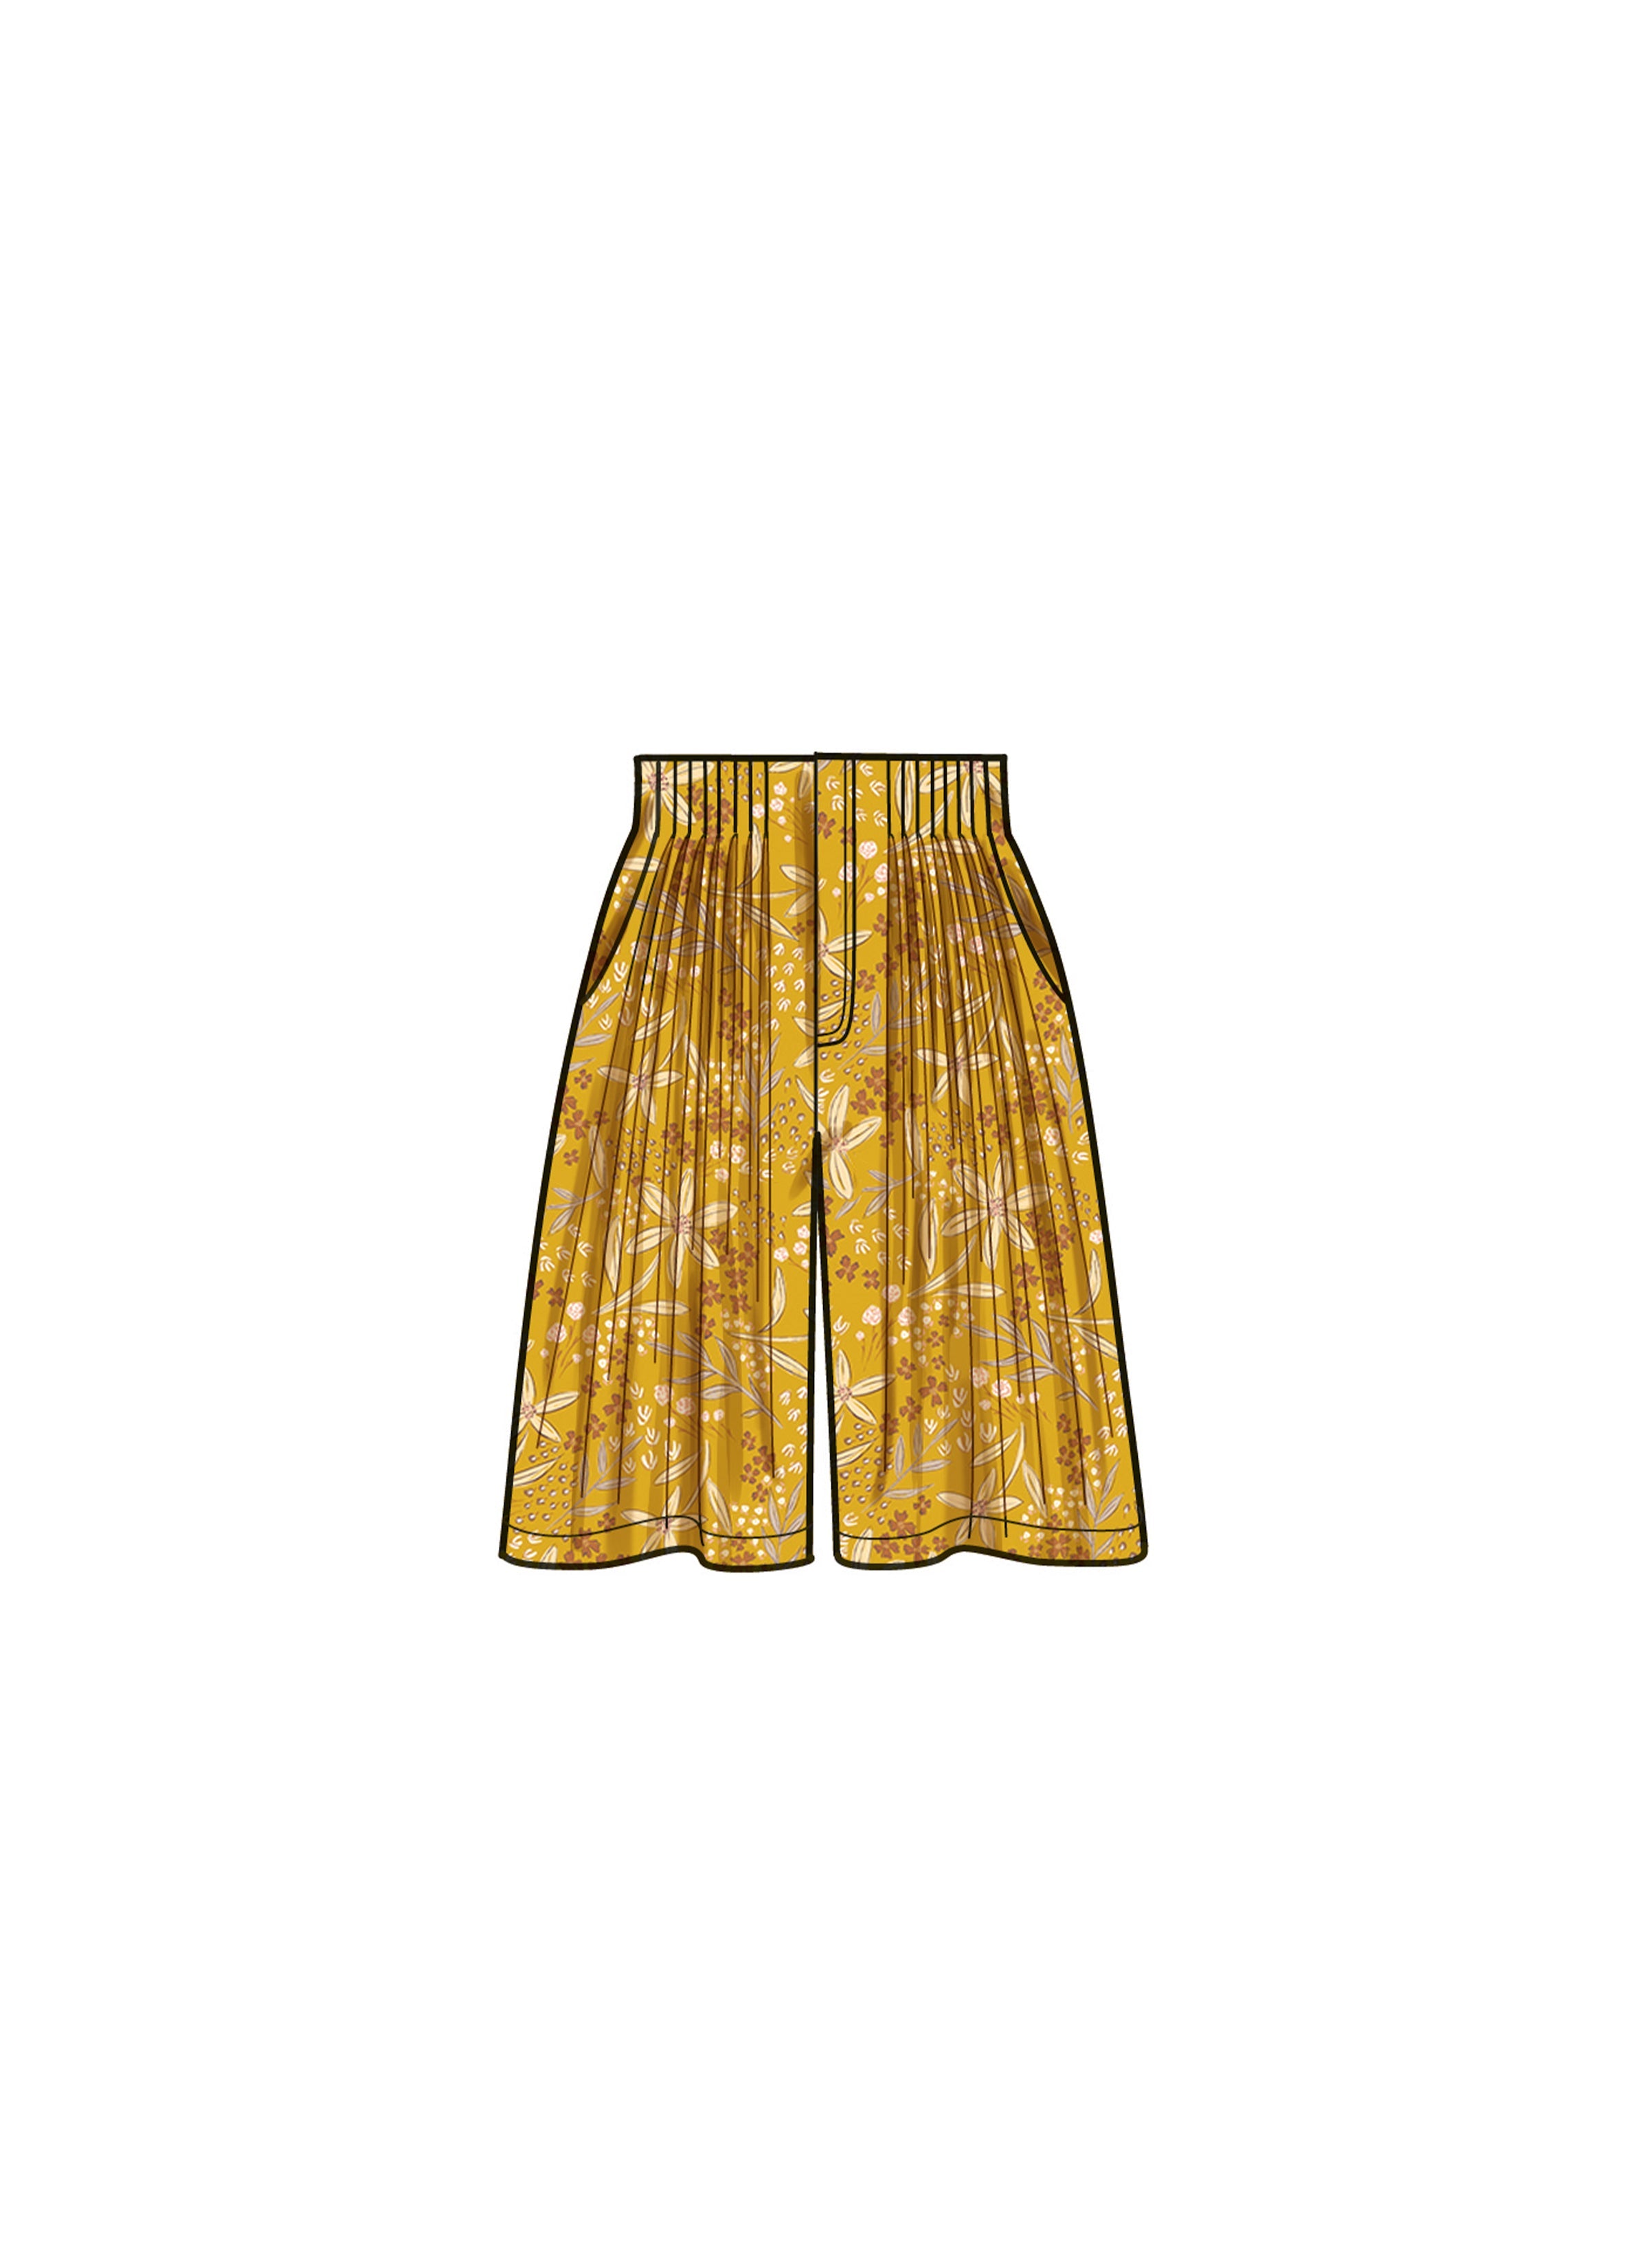 Simplicity 9715 Shirt, Pants and Shorts Sewing pattern from Jaycotts Sewing Supplies